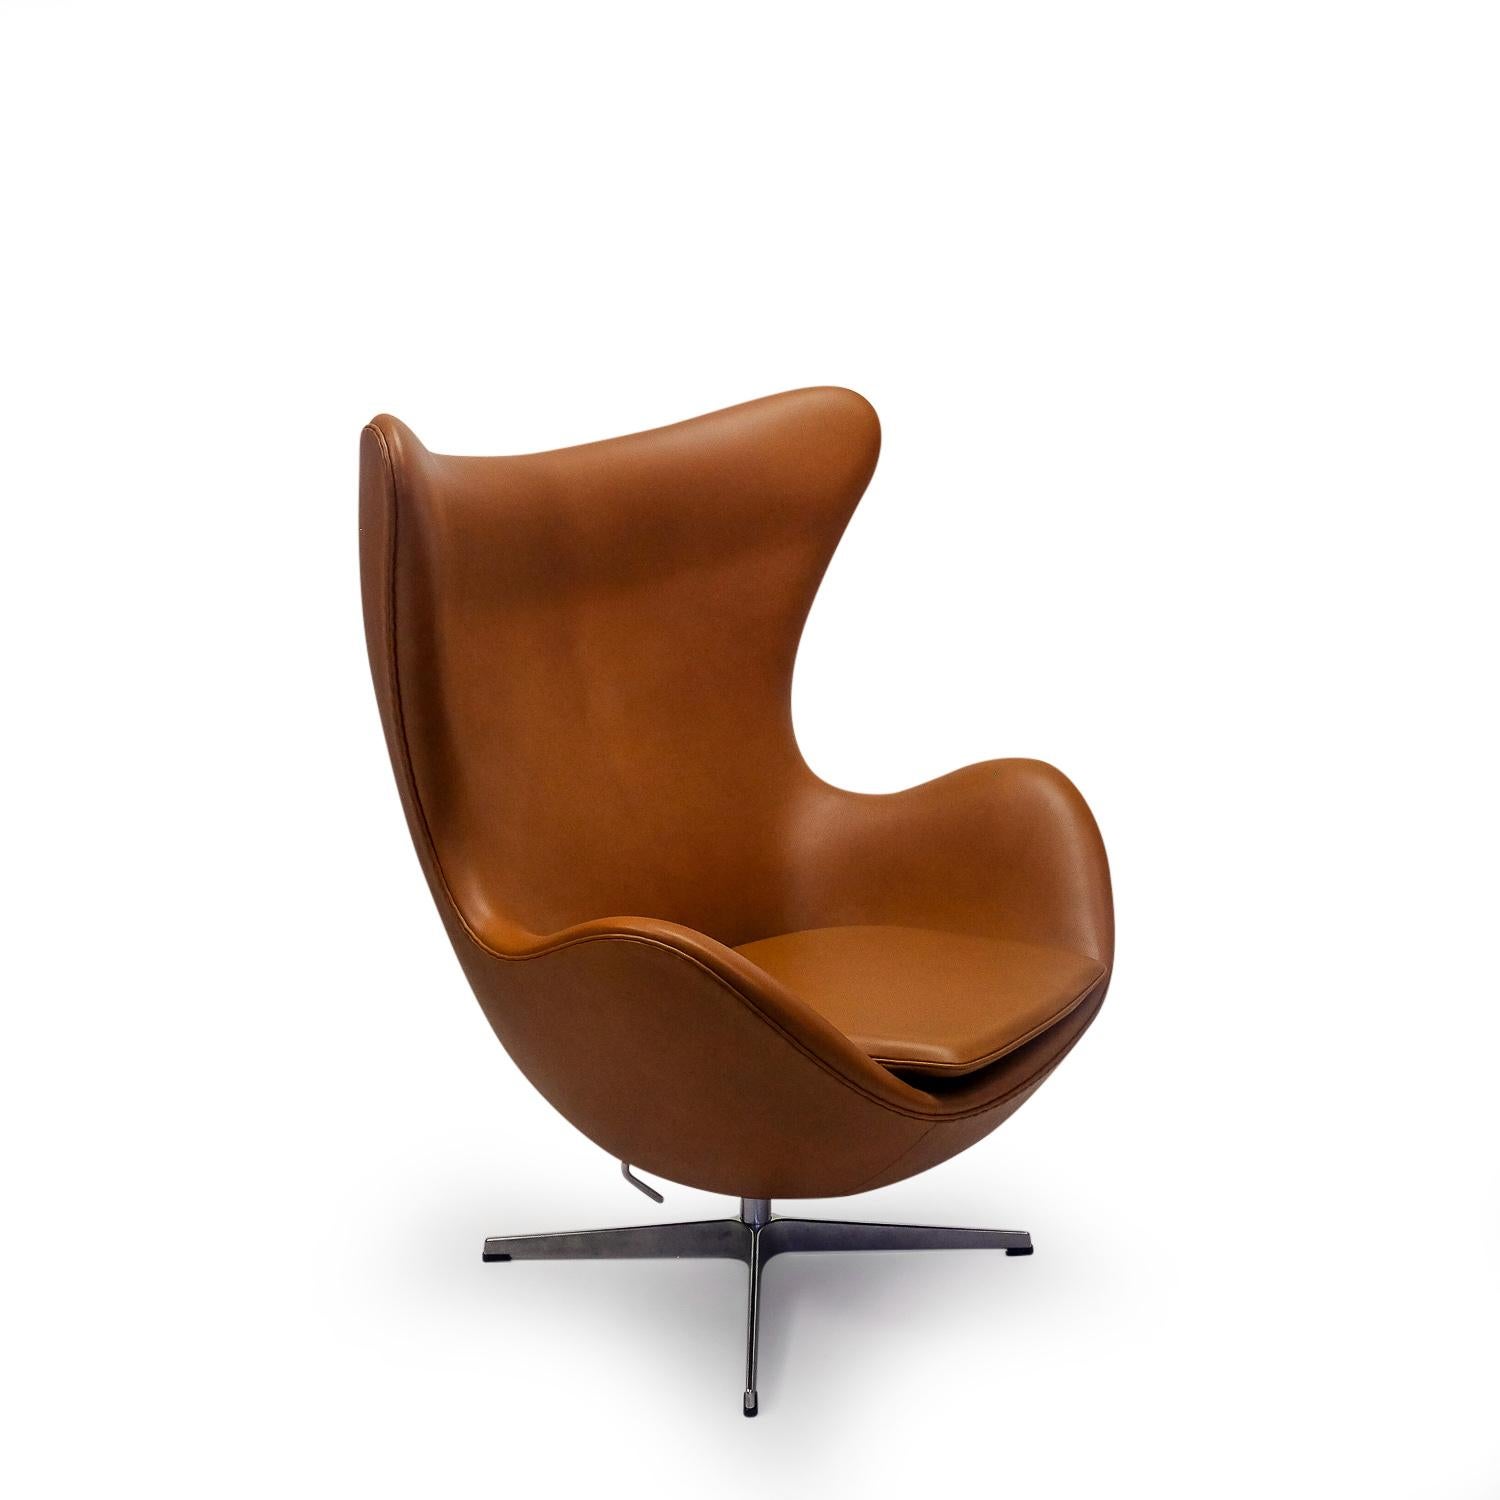 Late 20th Century Danish Design Classic Fritz Hansen Egg Chair by Arne Jacobsen, in Cognac Leather